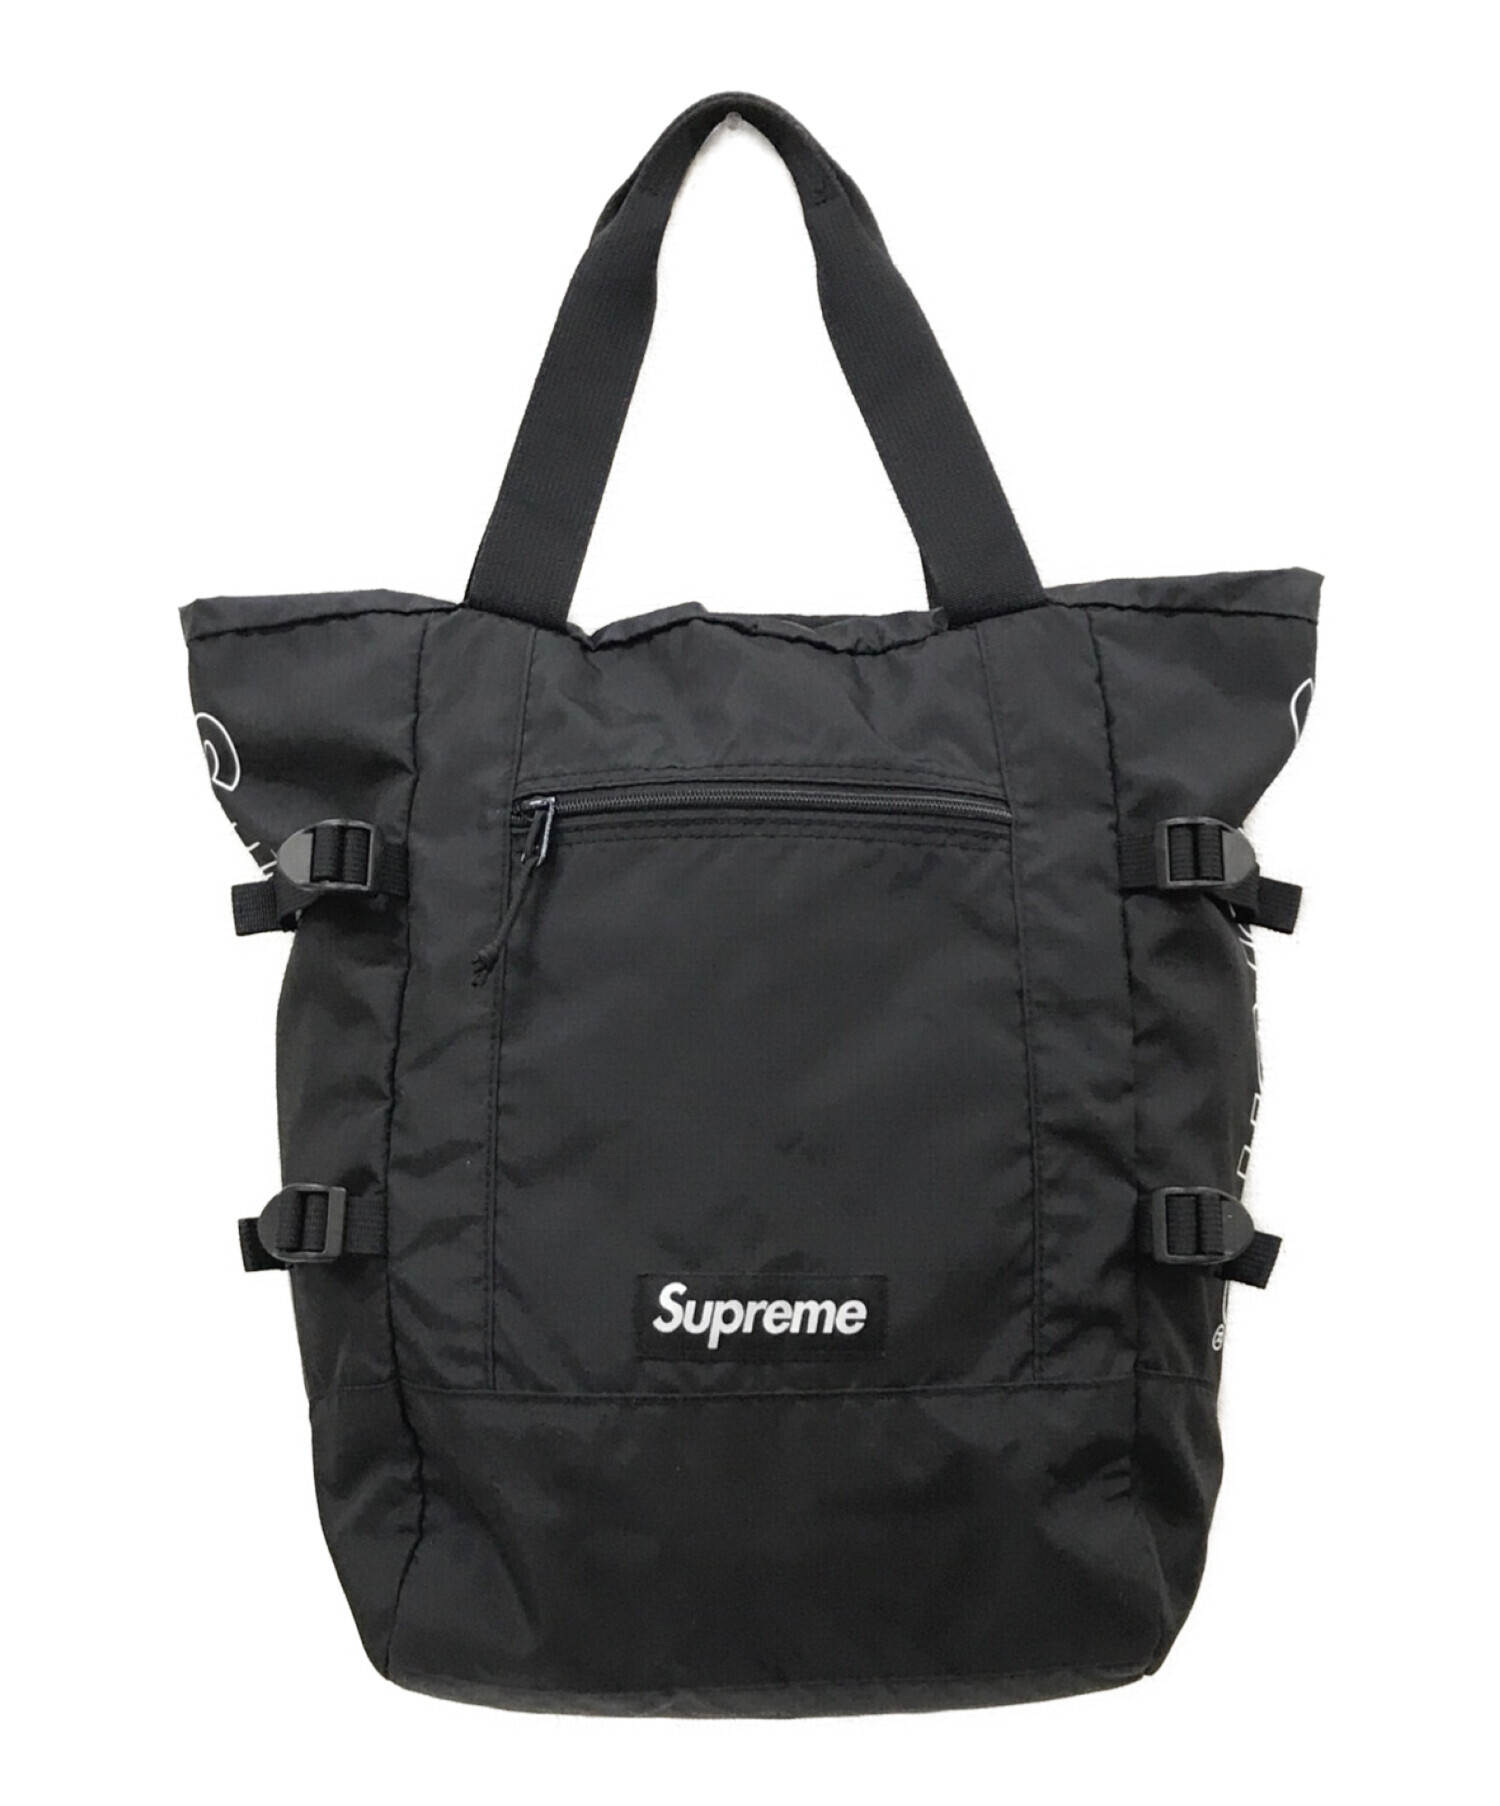 supreme tote backpack black